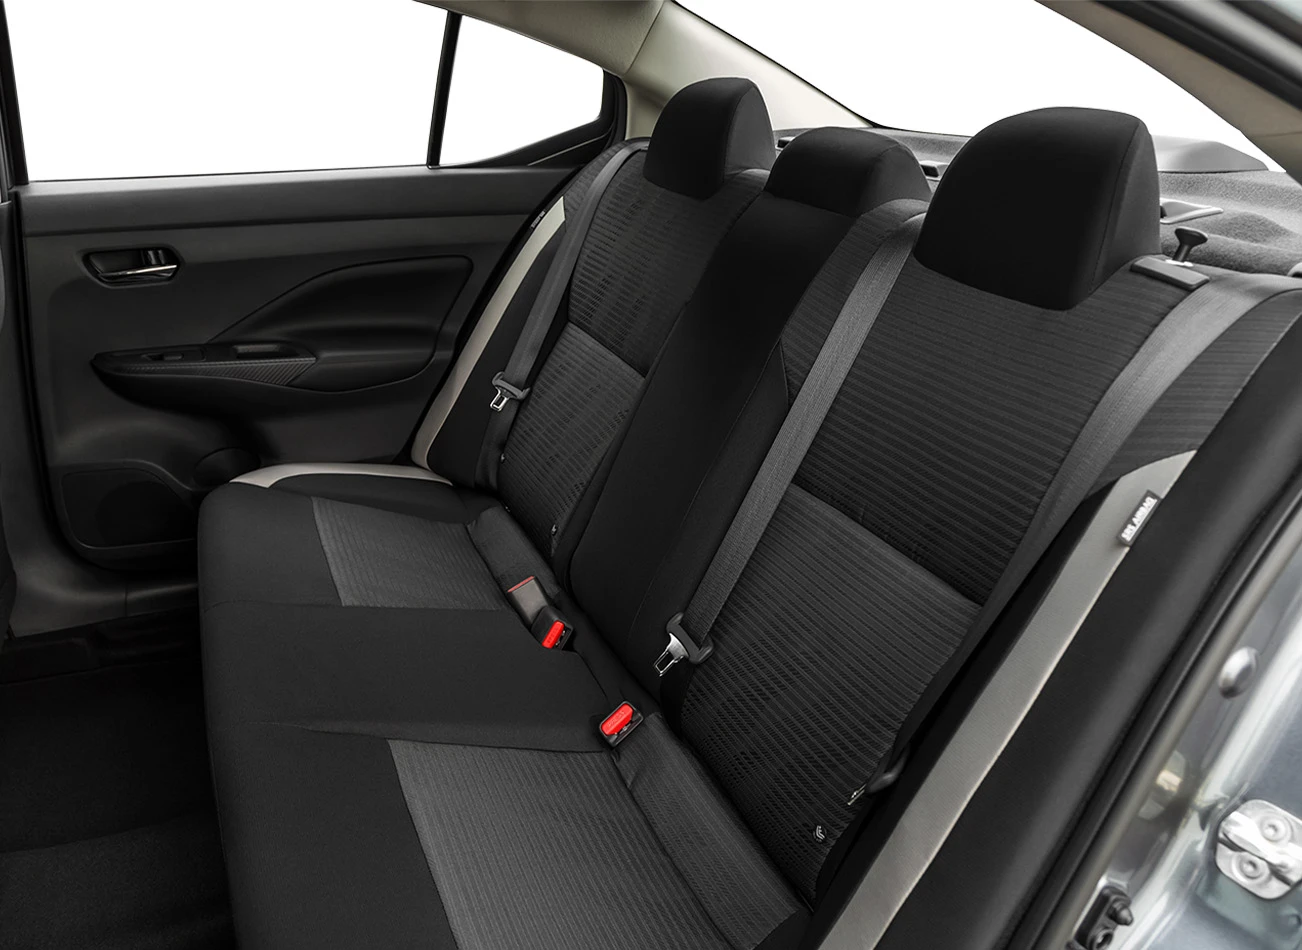 2020 Nissan Versa: Backseats | CarMax